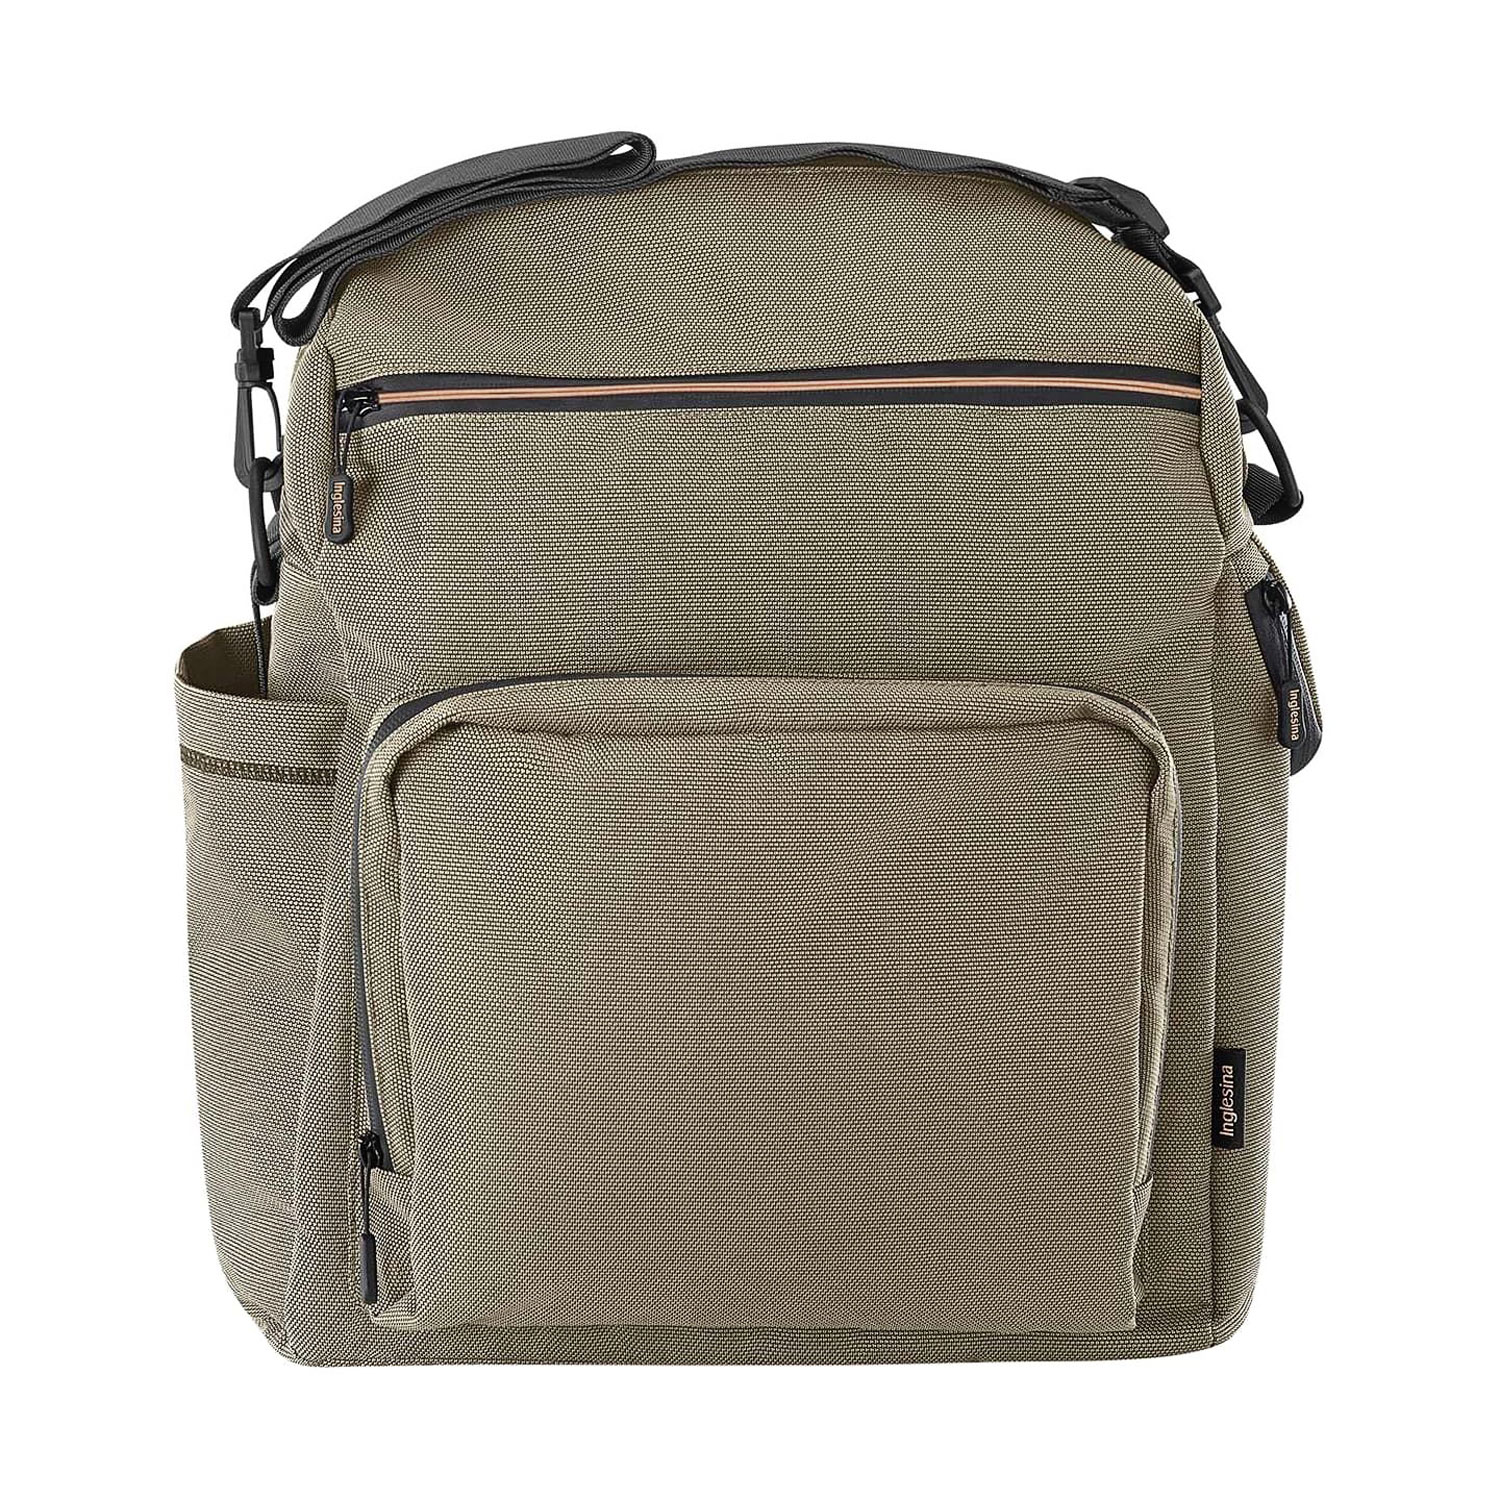 Сумка-рюкзак для коляски ADVENTURE BAG, цвет TUAREG BEIGE Inglesina сумка рюкзак для коляски adventure bag charcoal grey 2021 inglesina